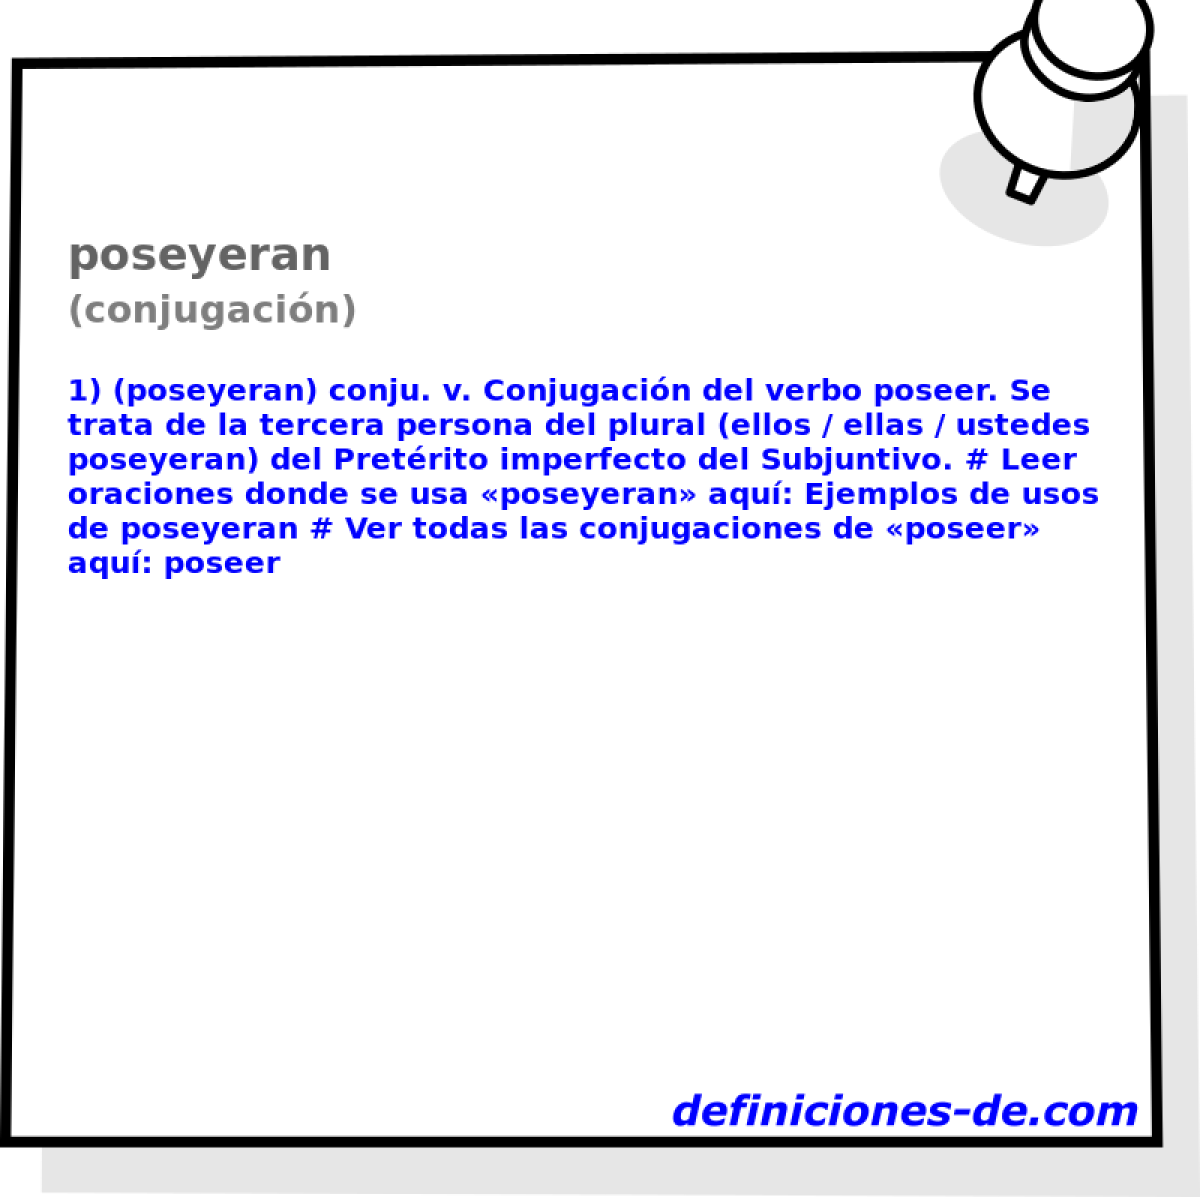 poseyeran (conjugacin)